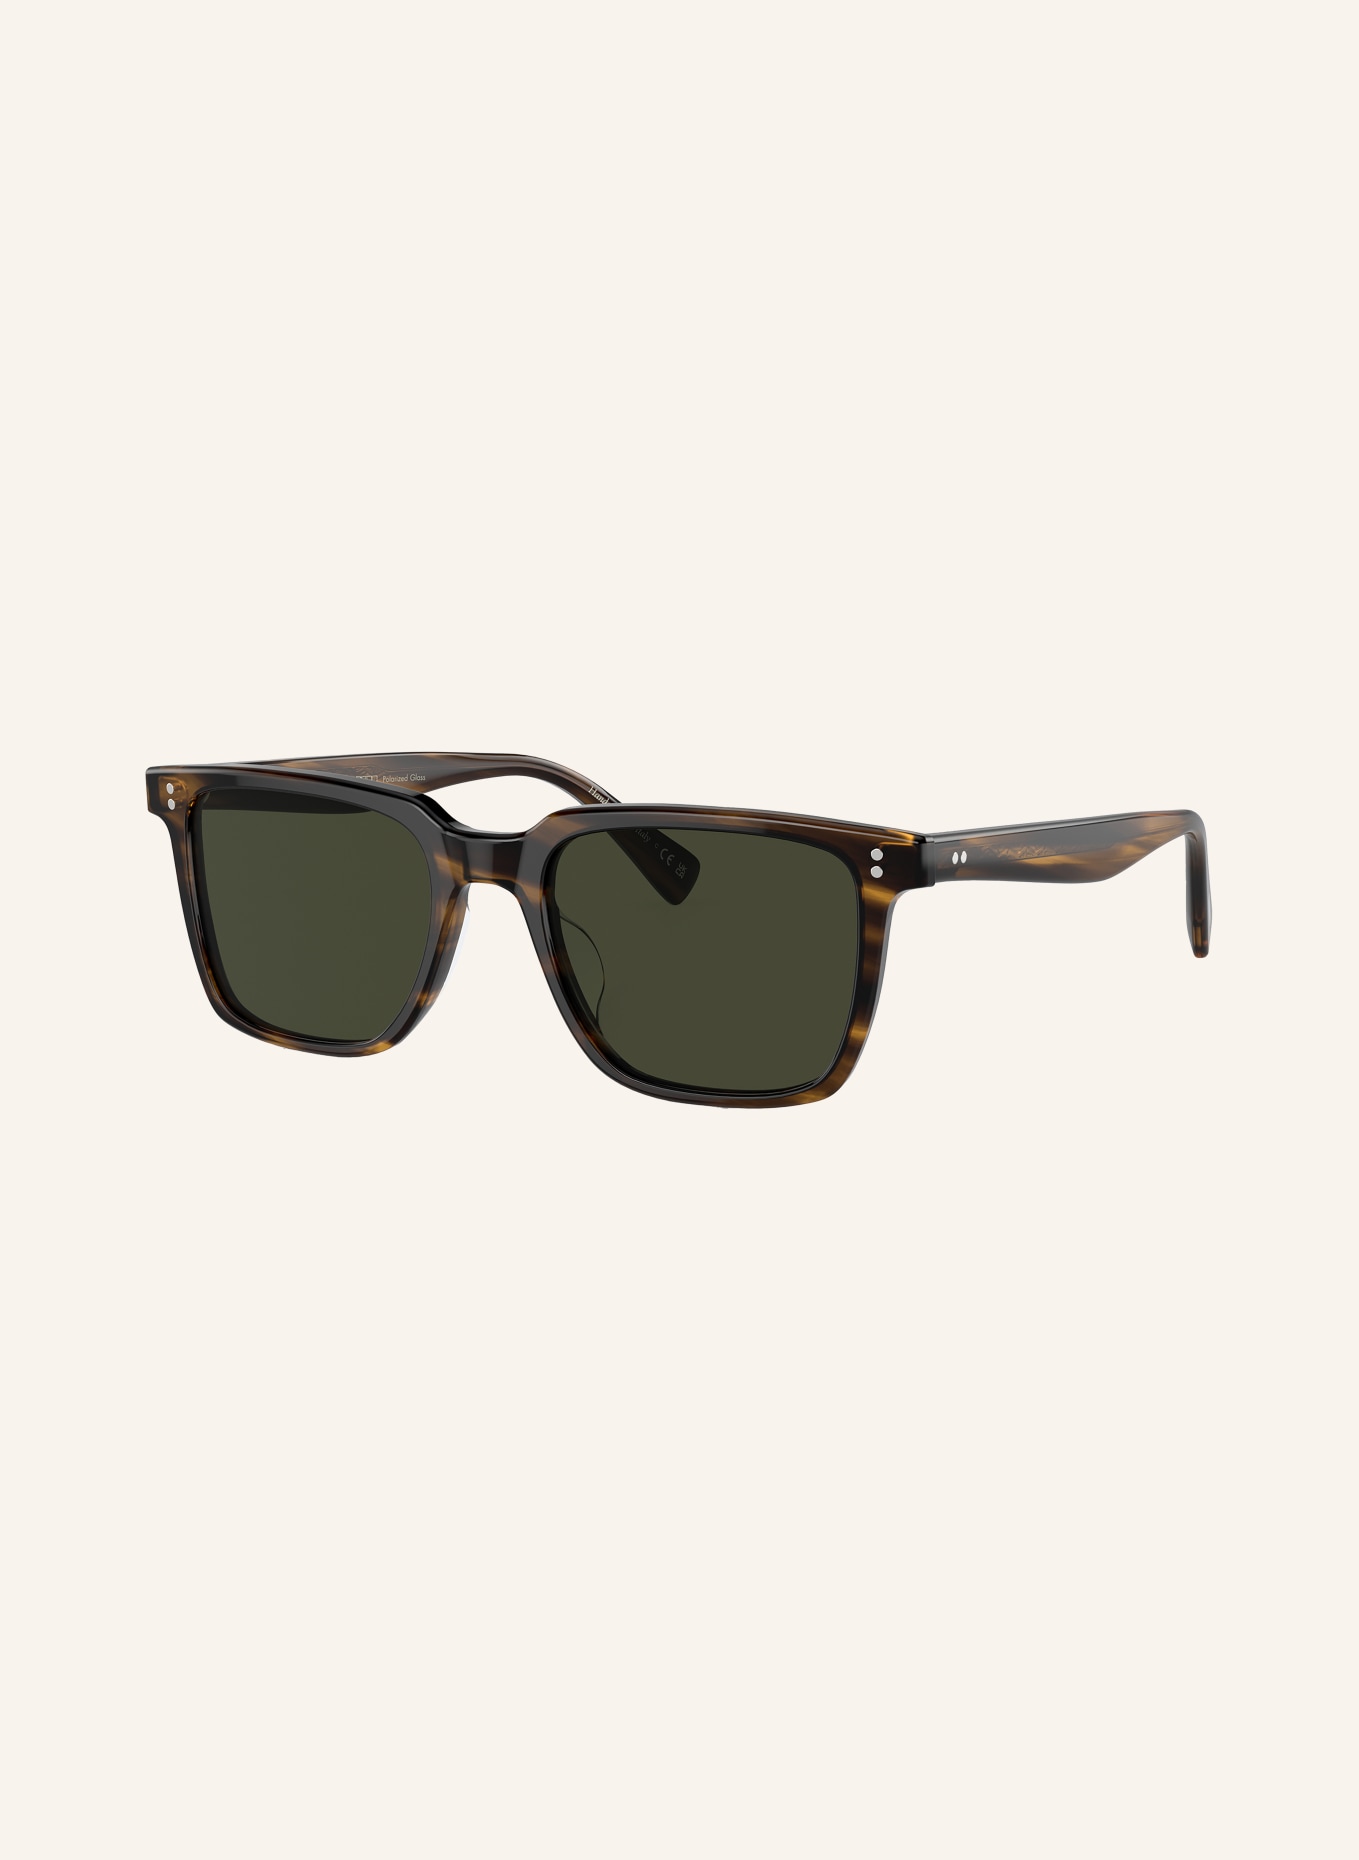 Oliver Peoples Sunglasses for Men & Women